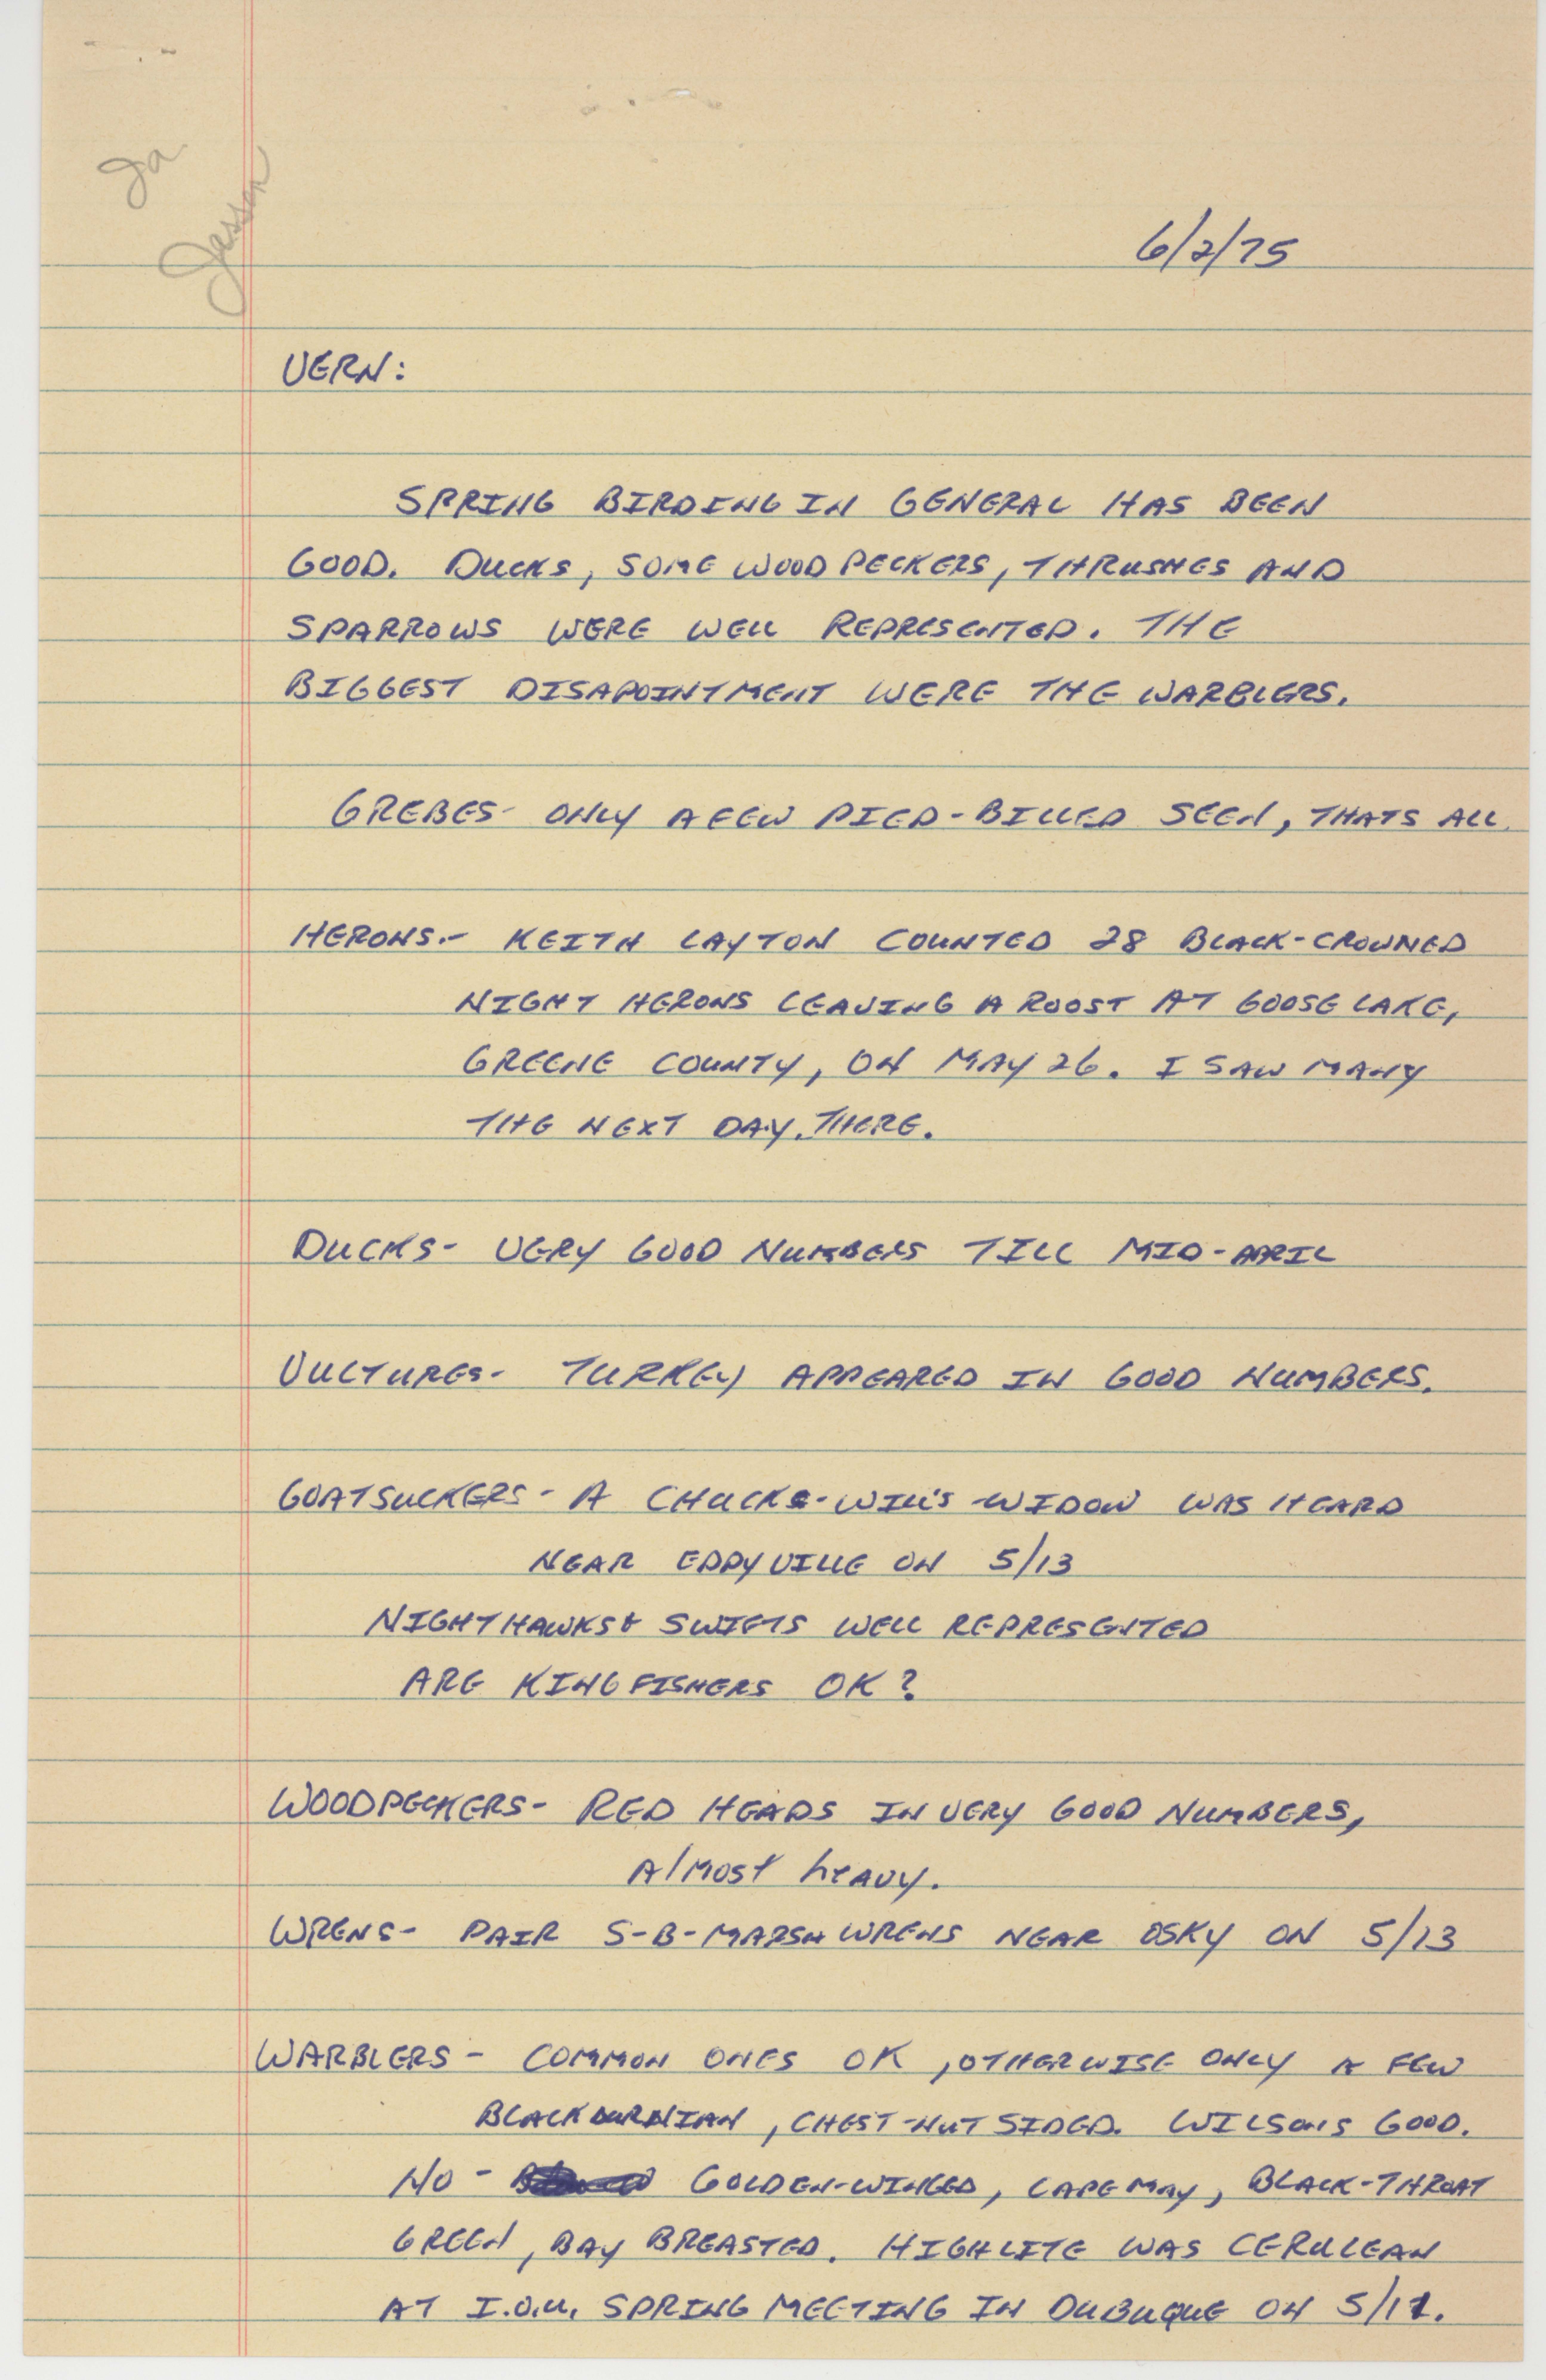 Robert Jessen letter to Vernon M. Kleen regarding spring birds sighted near Oskaloosa, June 2, 1975